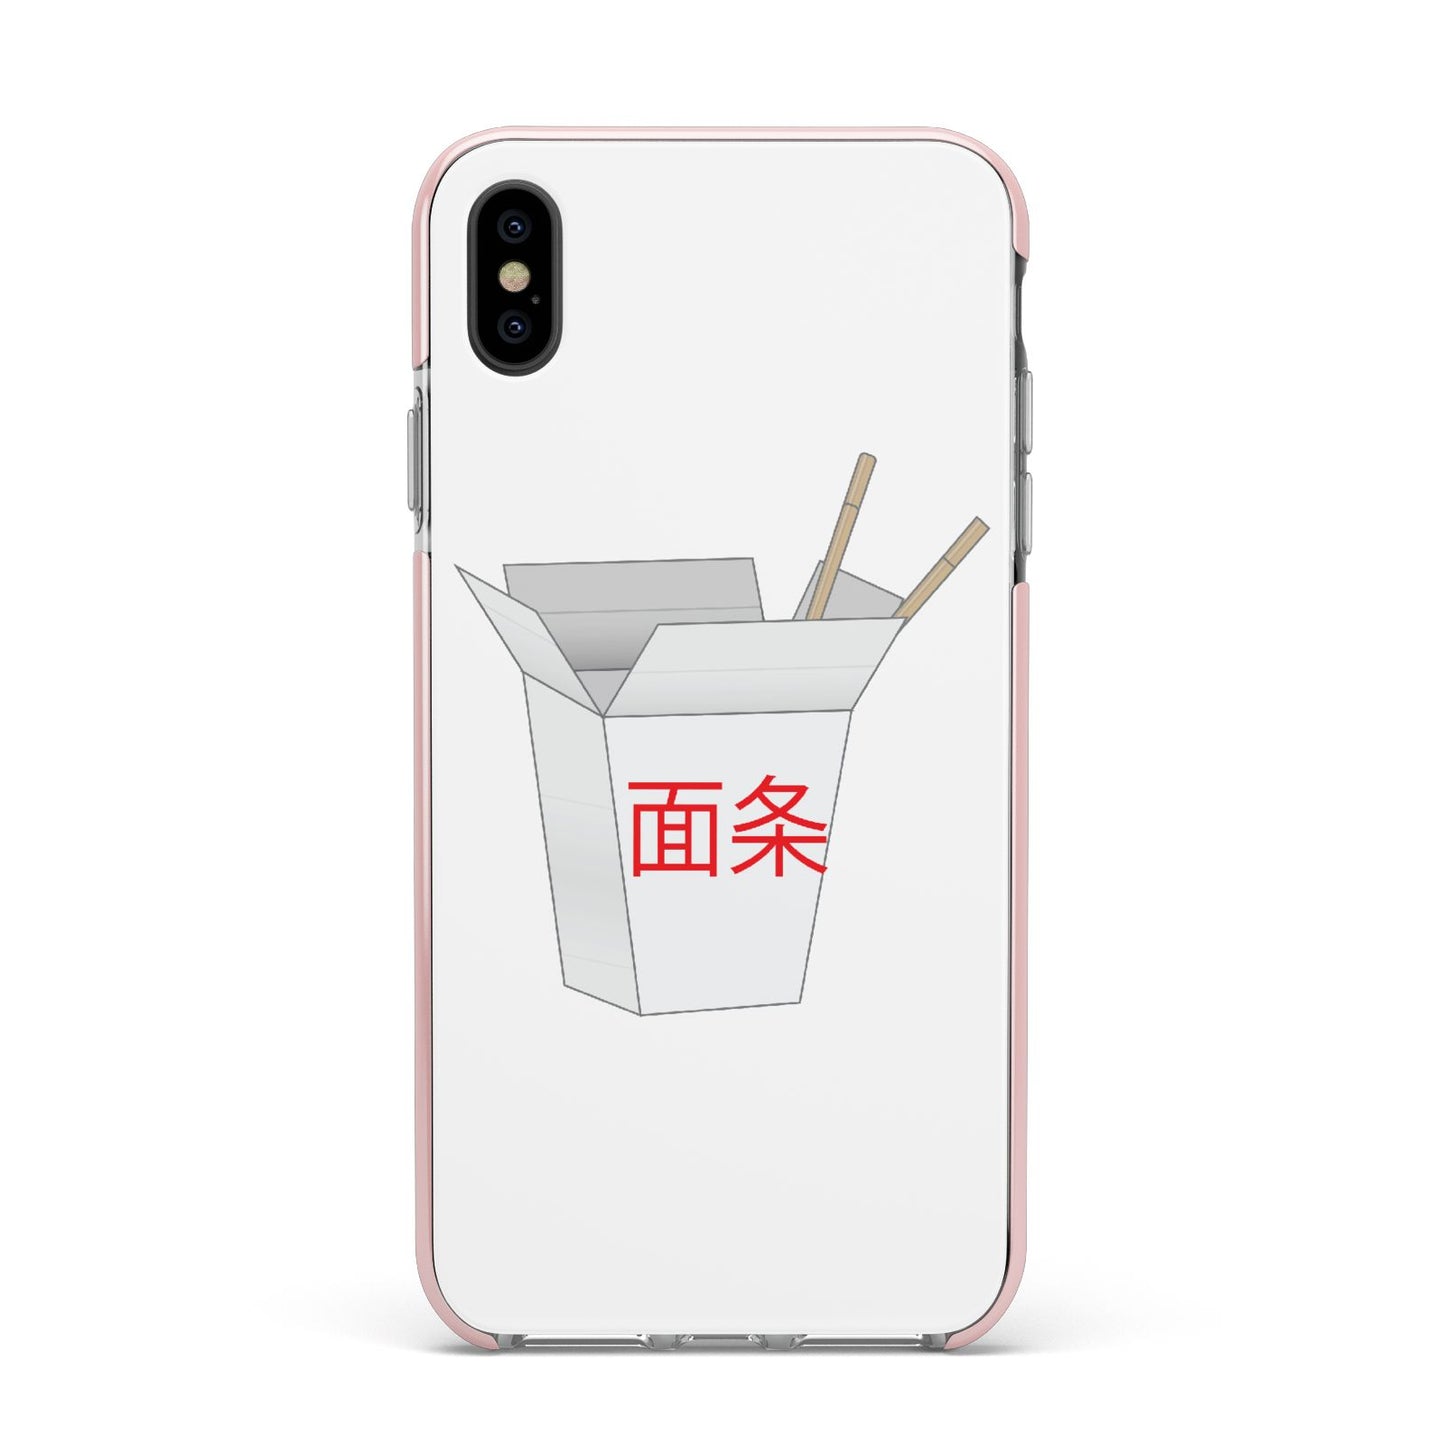 Chinese Takeaway Box Apple iPhone Xs Max Impact Case Pink Edge on Black Phone